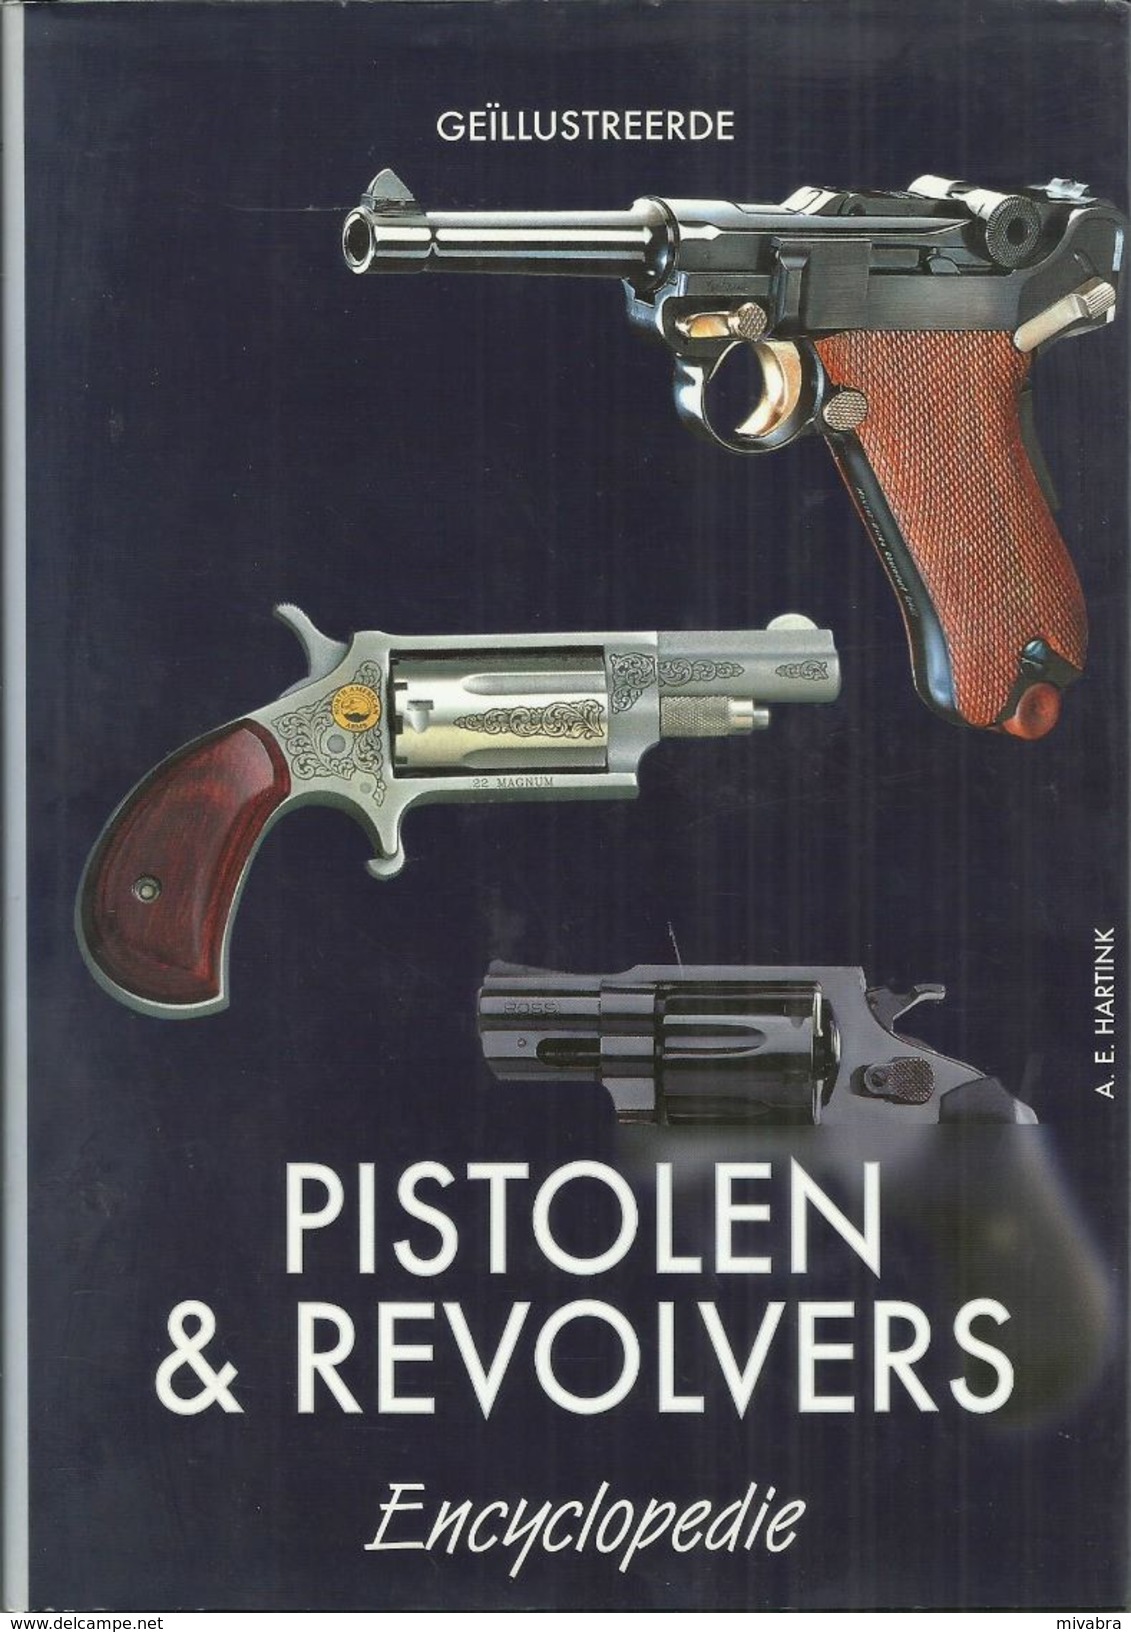 GEÏLLUSTREERDE PISTOLEN & REVOLVERS ENCYCLOPEDIE - A. E. HARTINK -  R &B 2003 - Enciclopedia